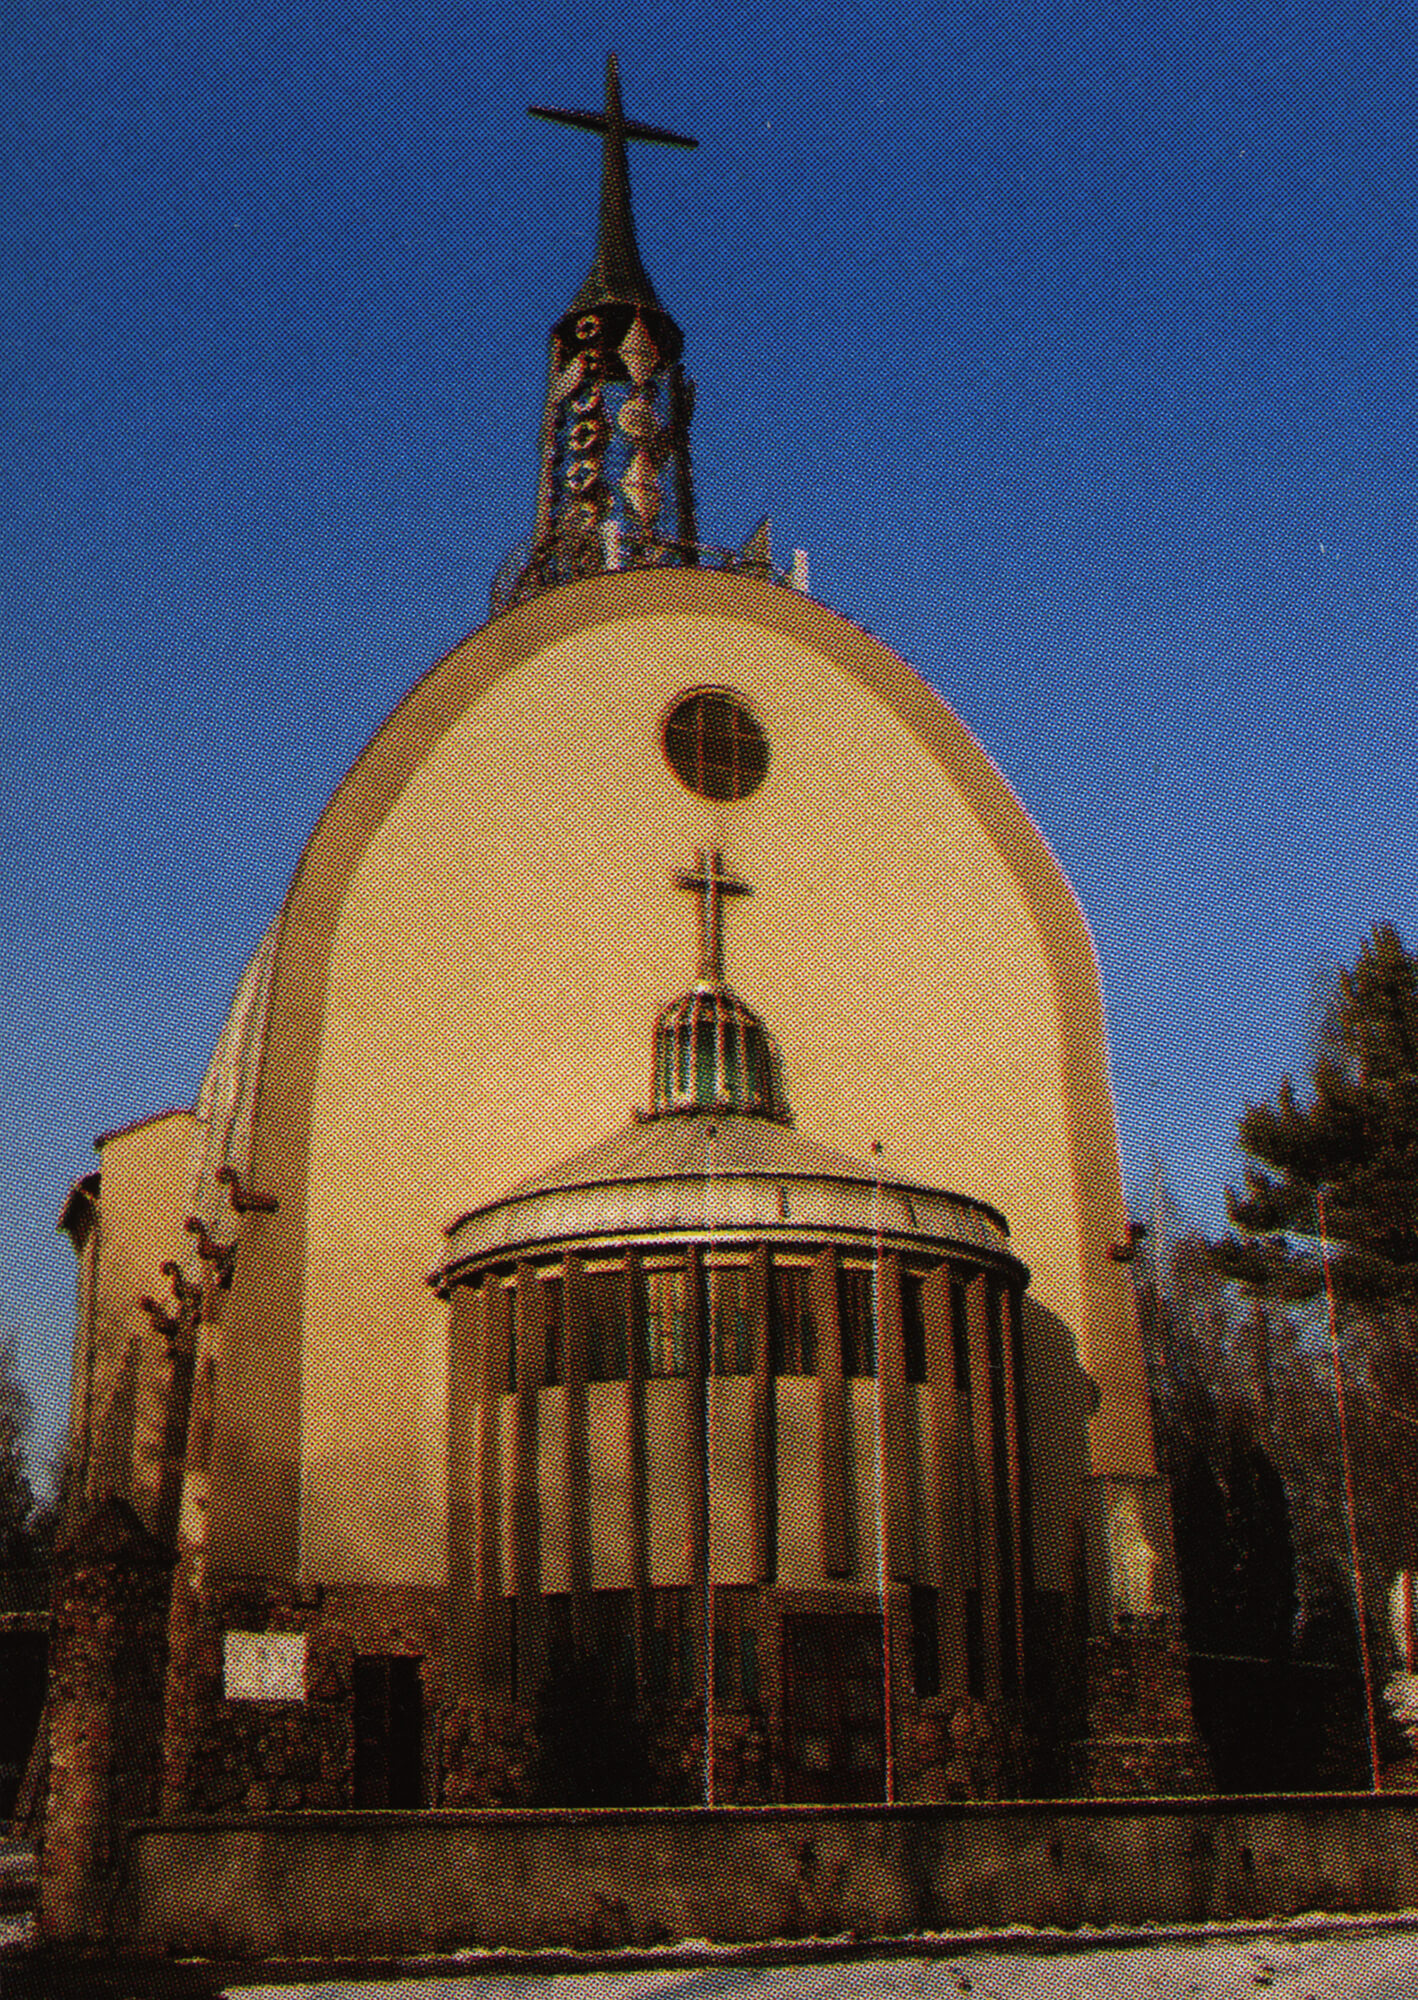 St. Anne's Parish Church, the Holy Family Parish in Michalczew